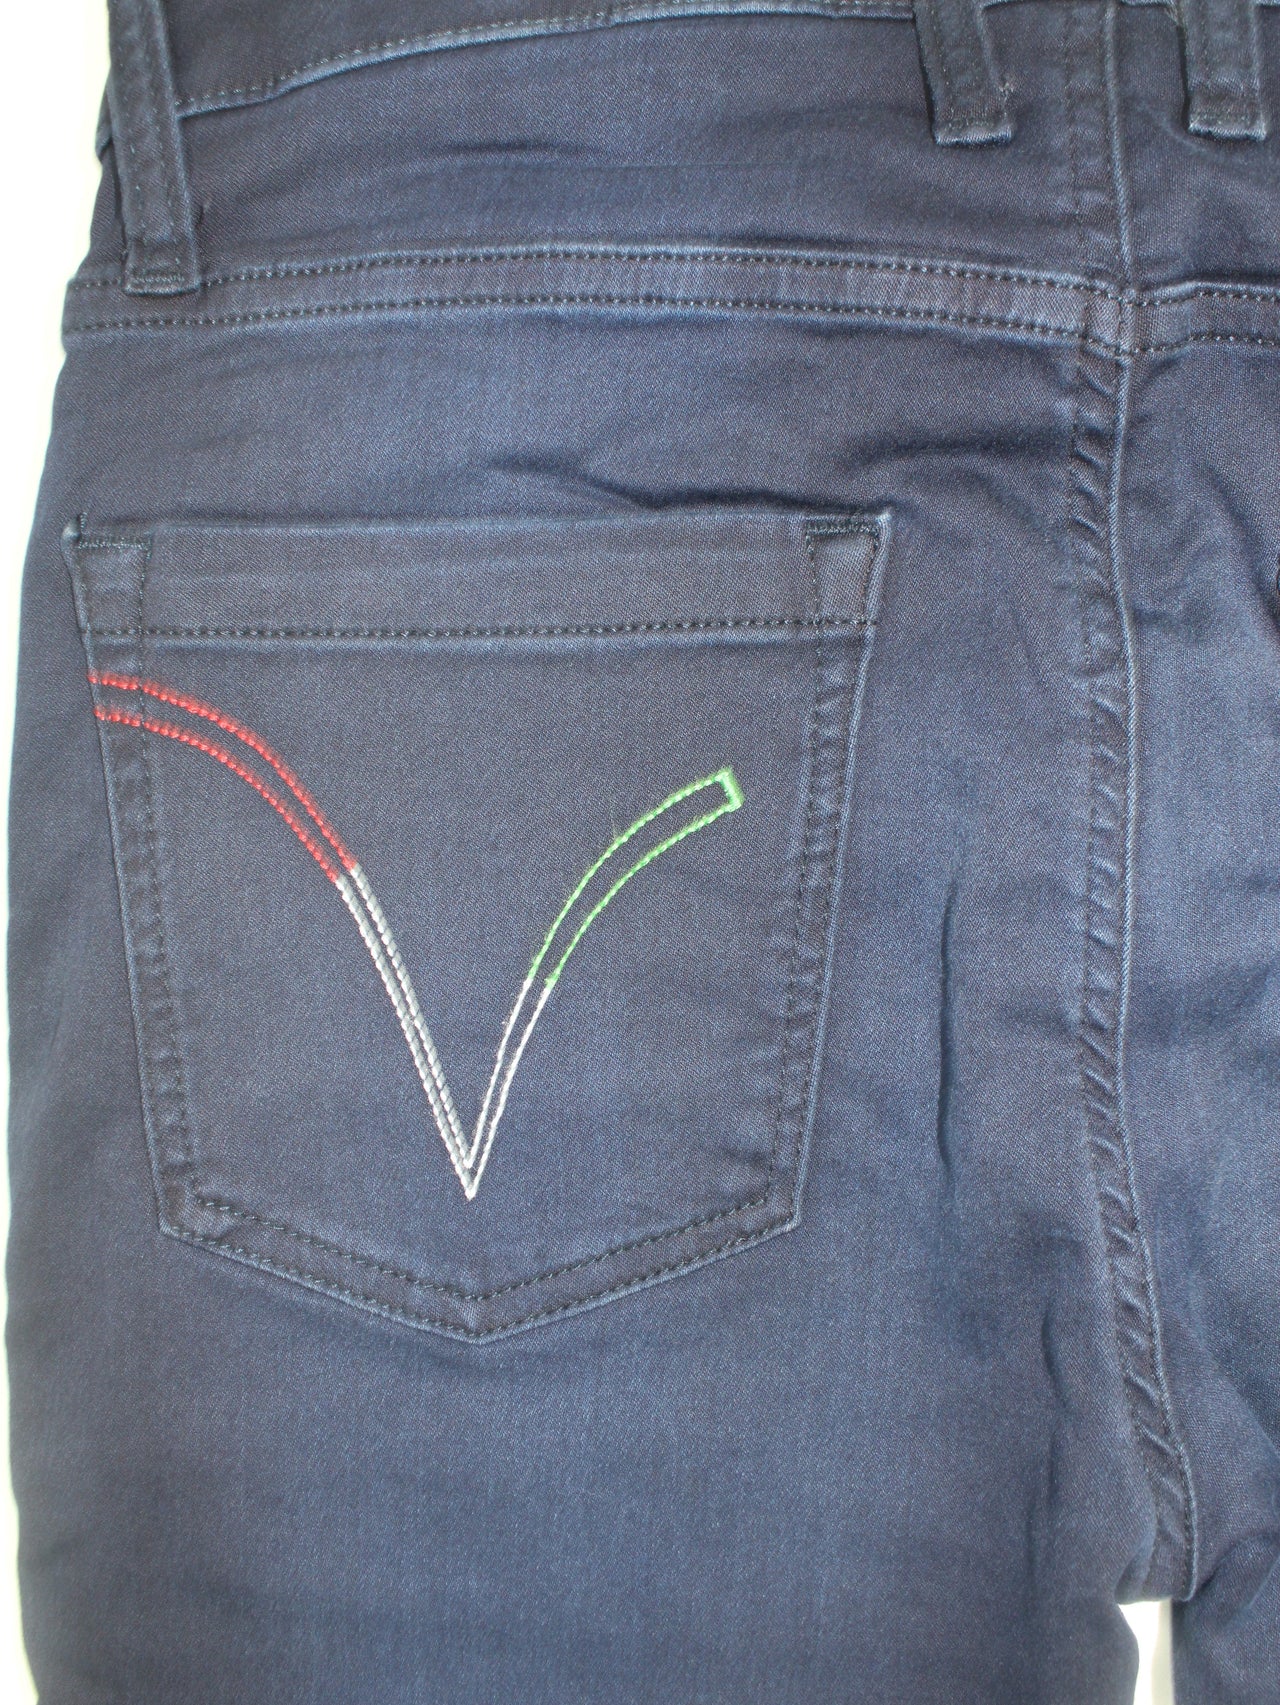 Vialli Bearie Navy Flex Ultra Fit Jeans